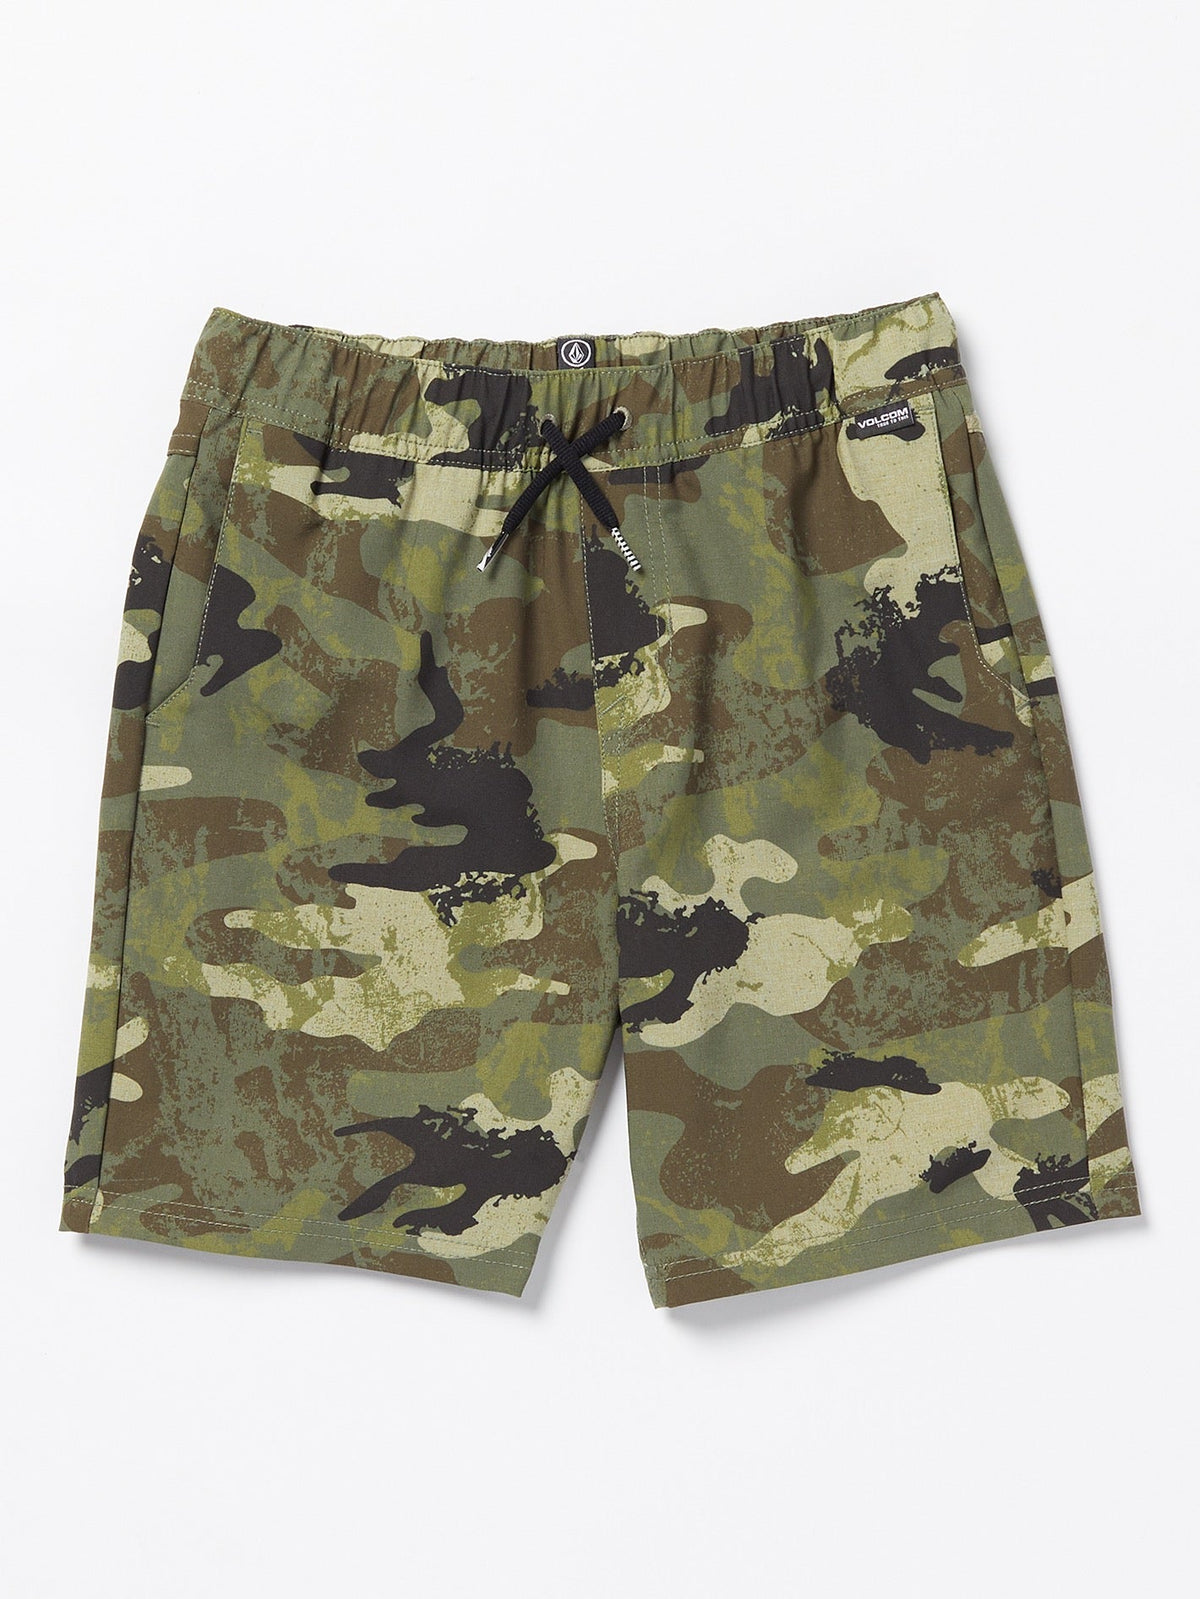 Volcom Elastic Waist Printed Hybrid Boys Shorts (Age 8-14) Army Camo